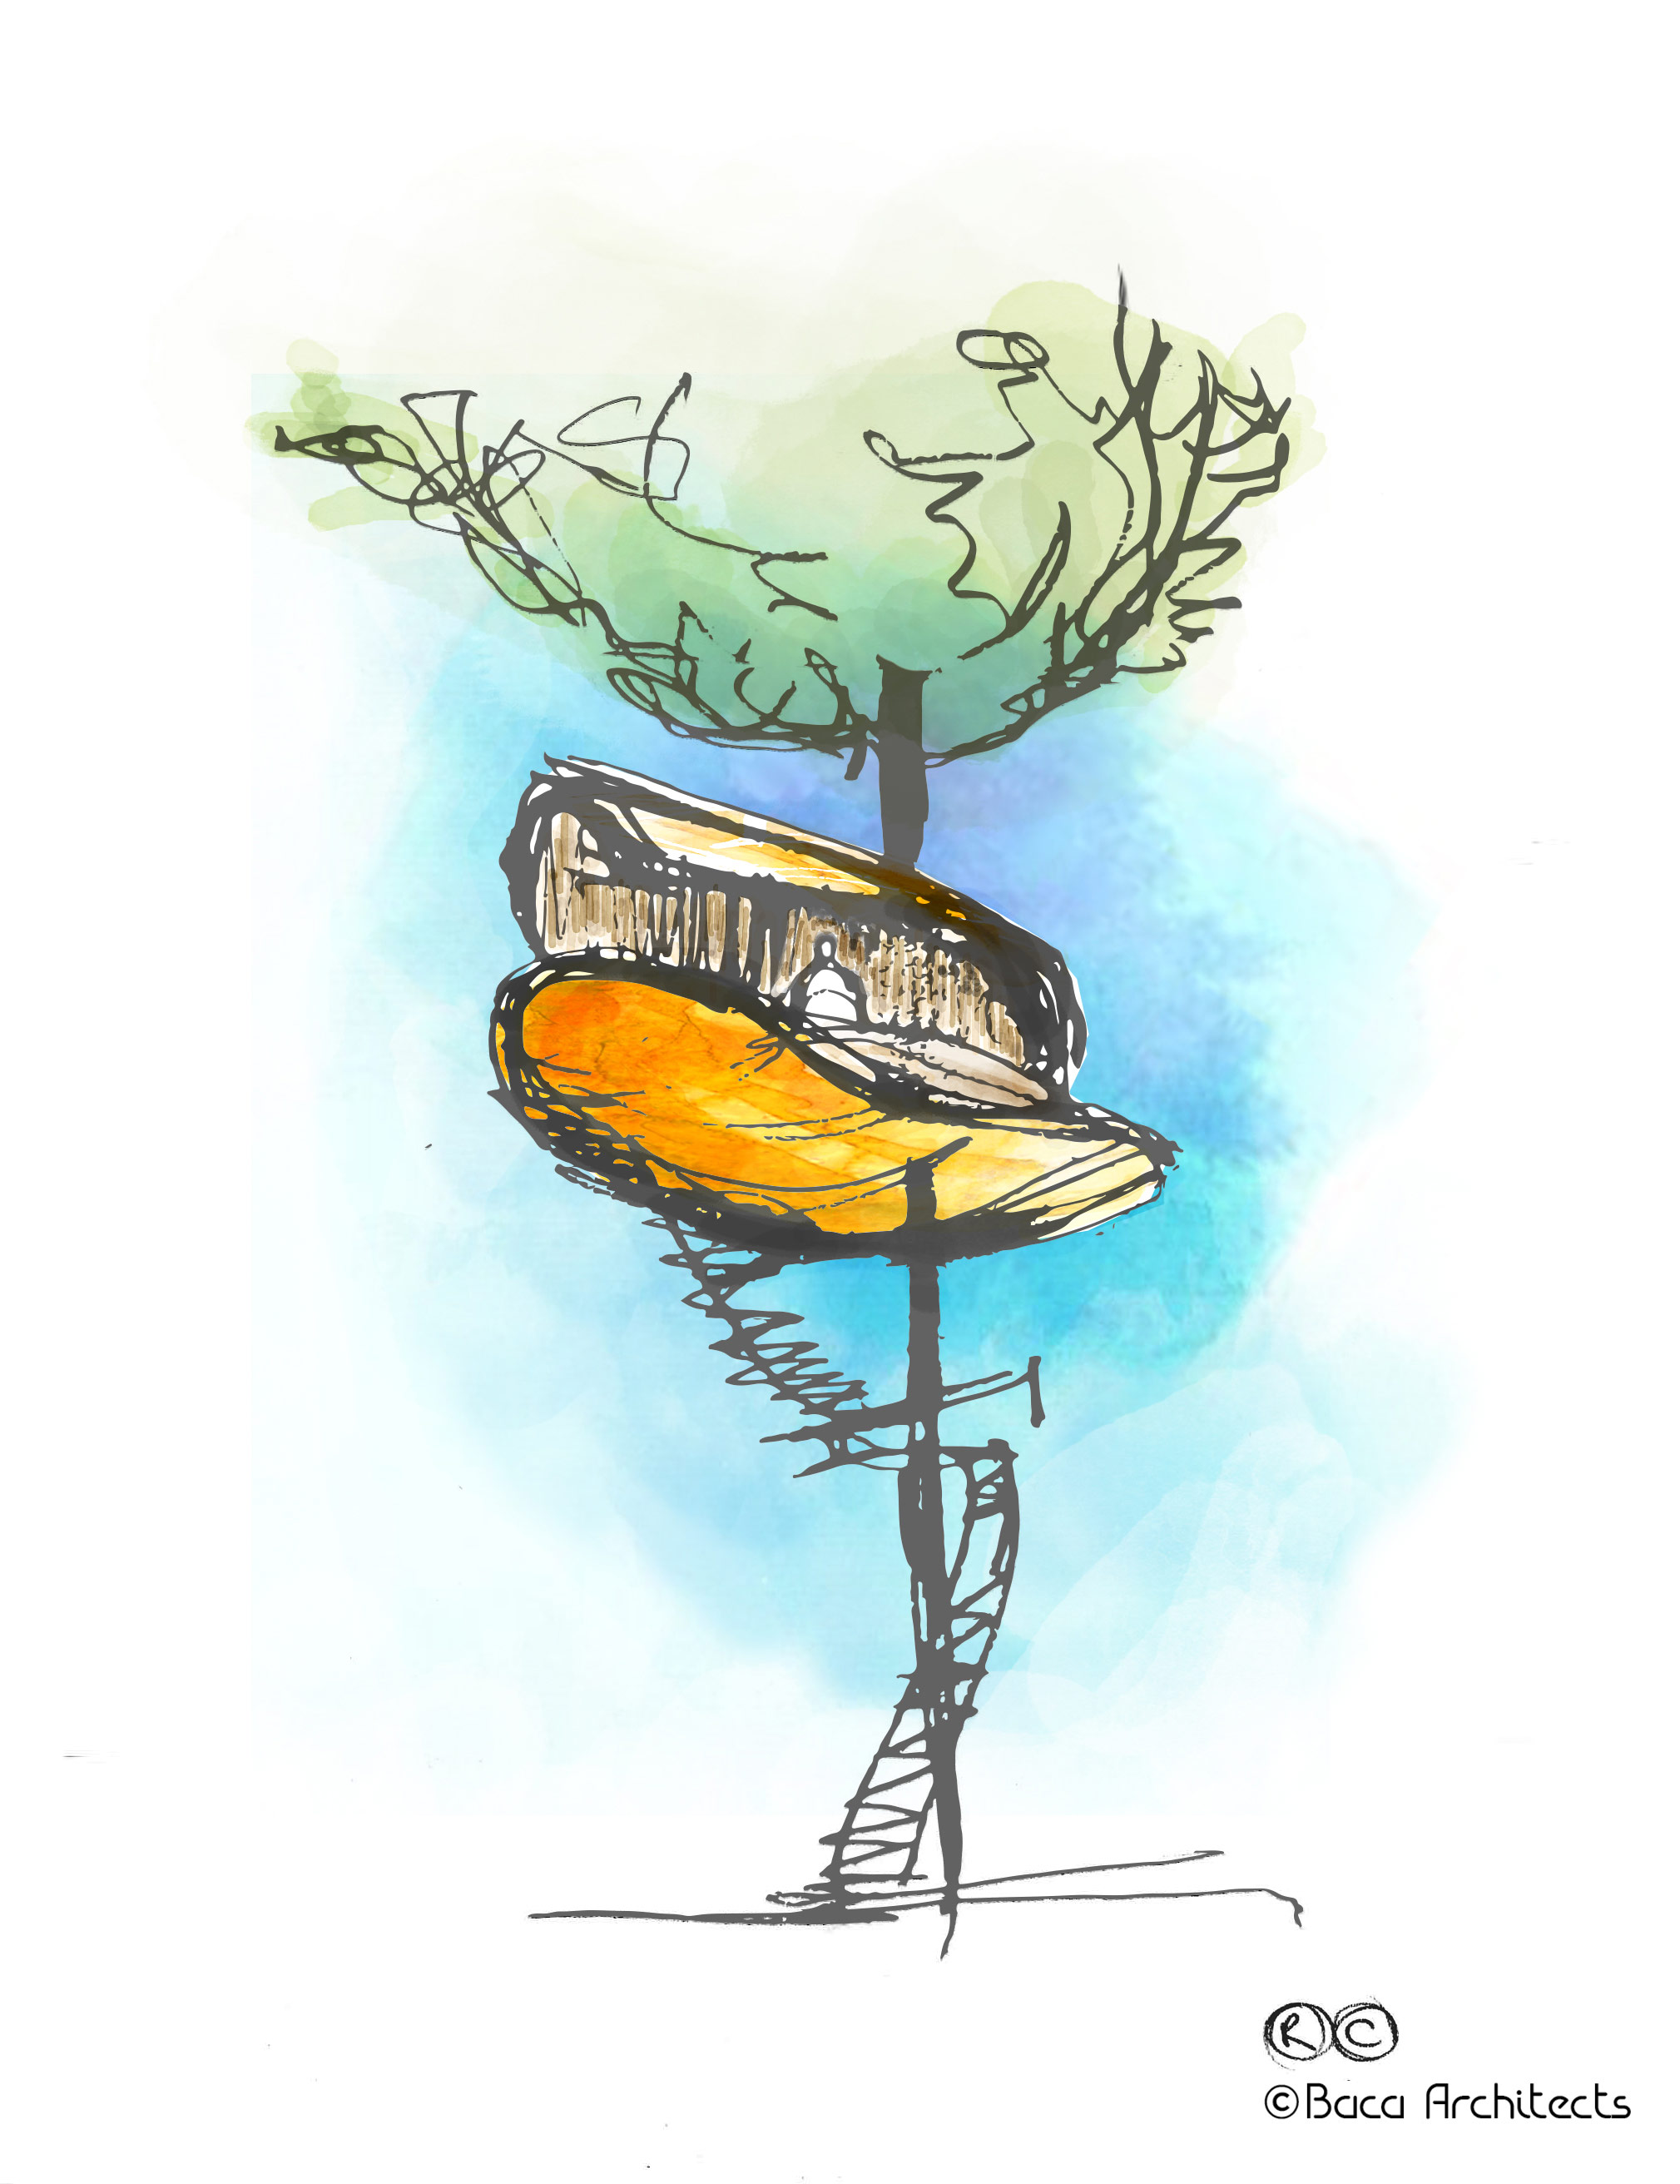 Initial sketch of Biku Treehouse design